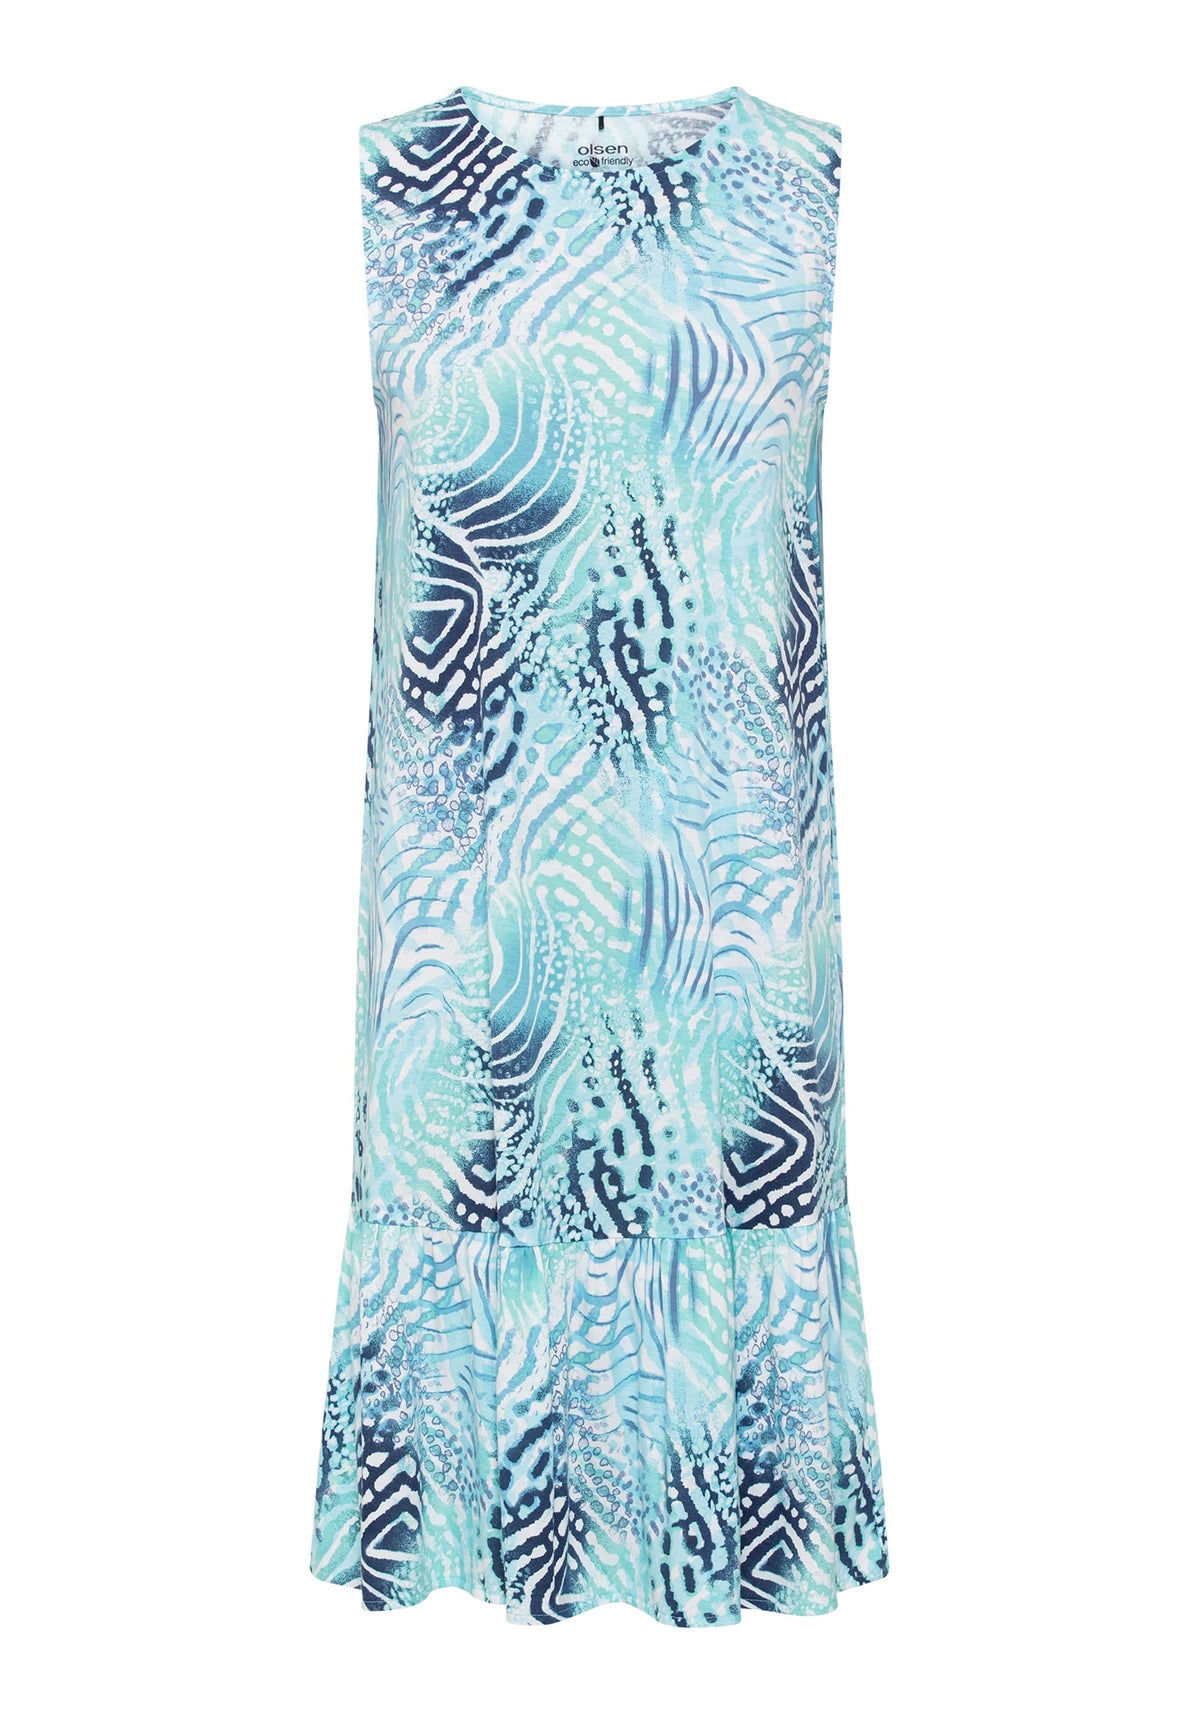 Sleeveless Water Print Dress containing TENCEL™ Modal